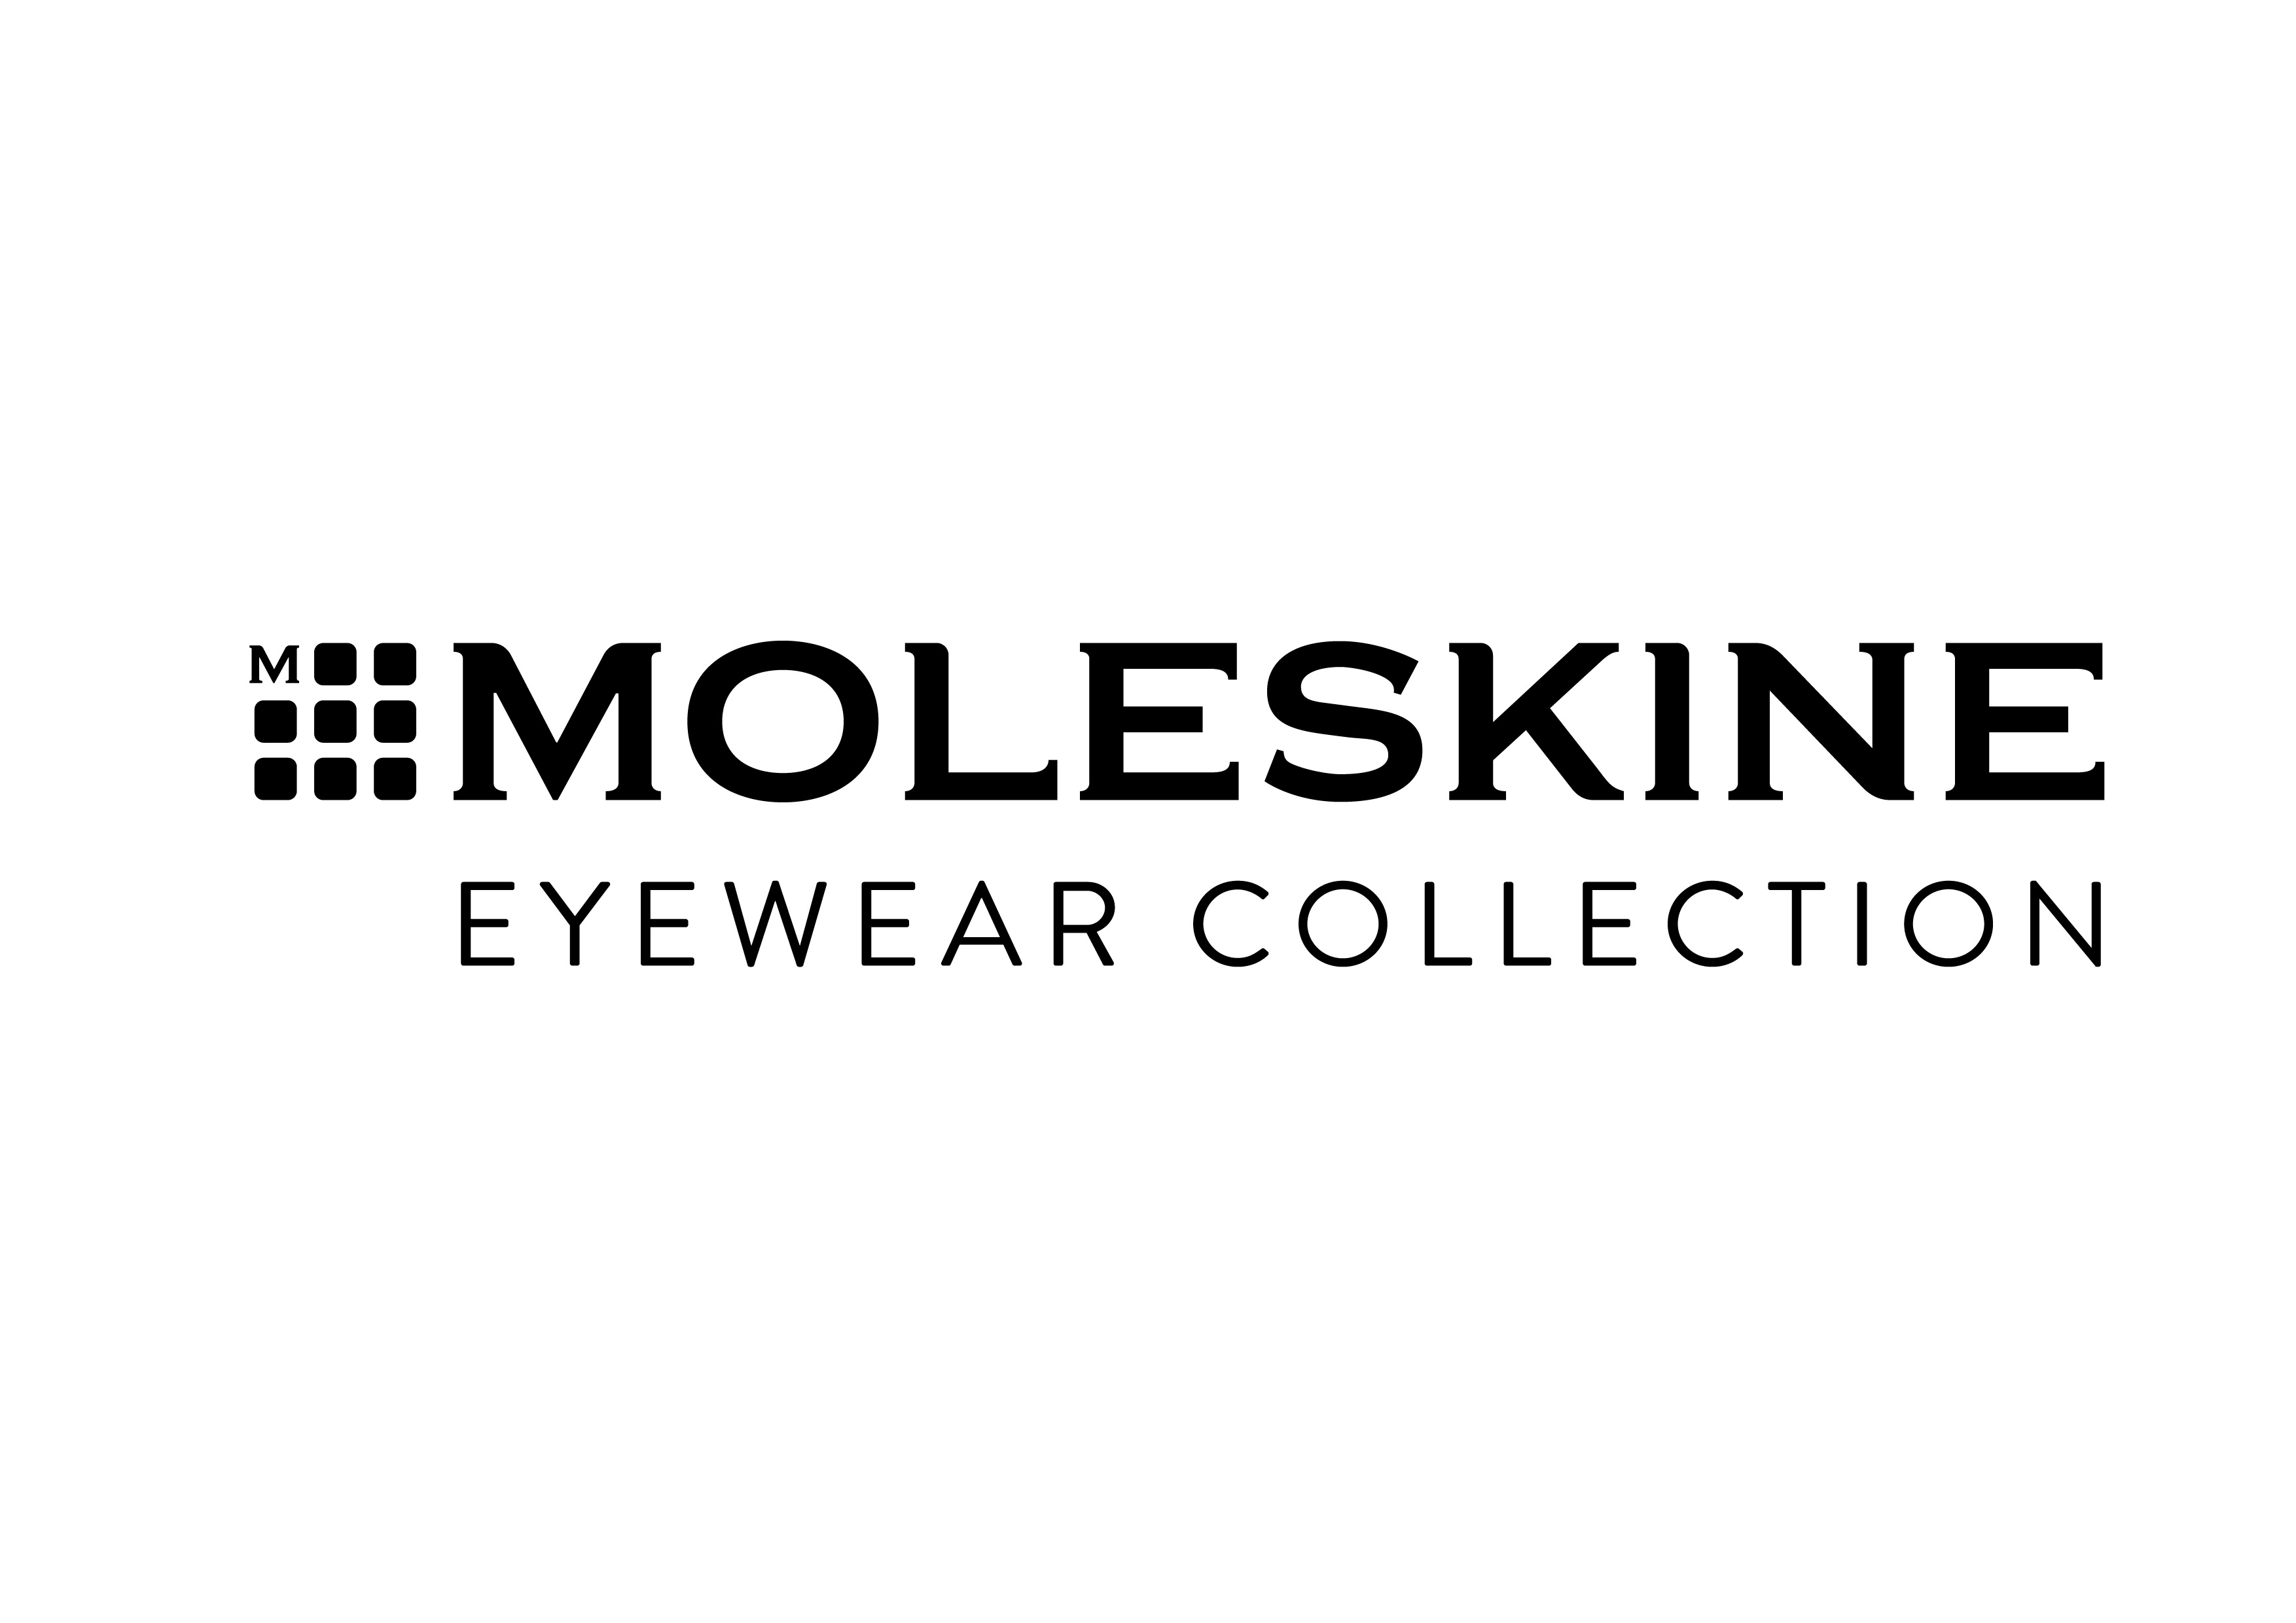 Moleskine-eyewear-collection-logo-Full-LOGO.JPG